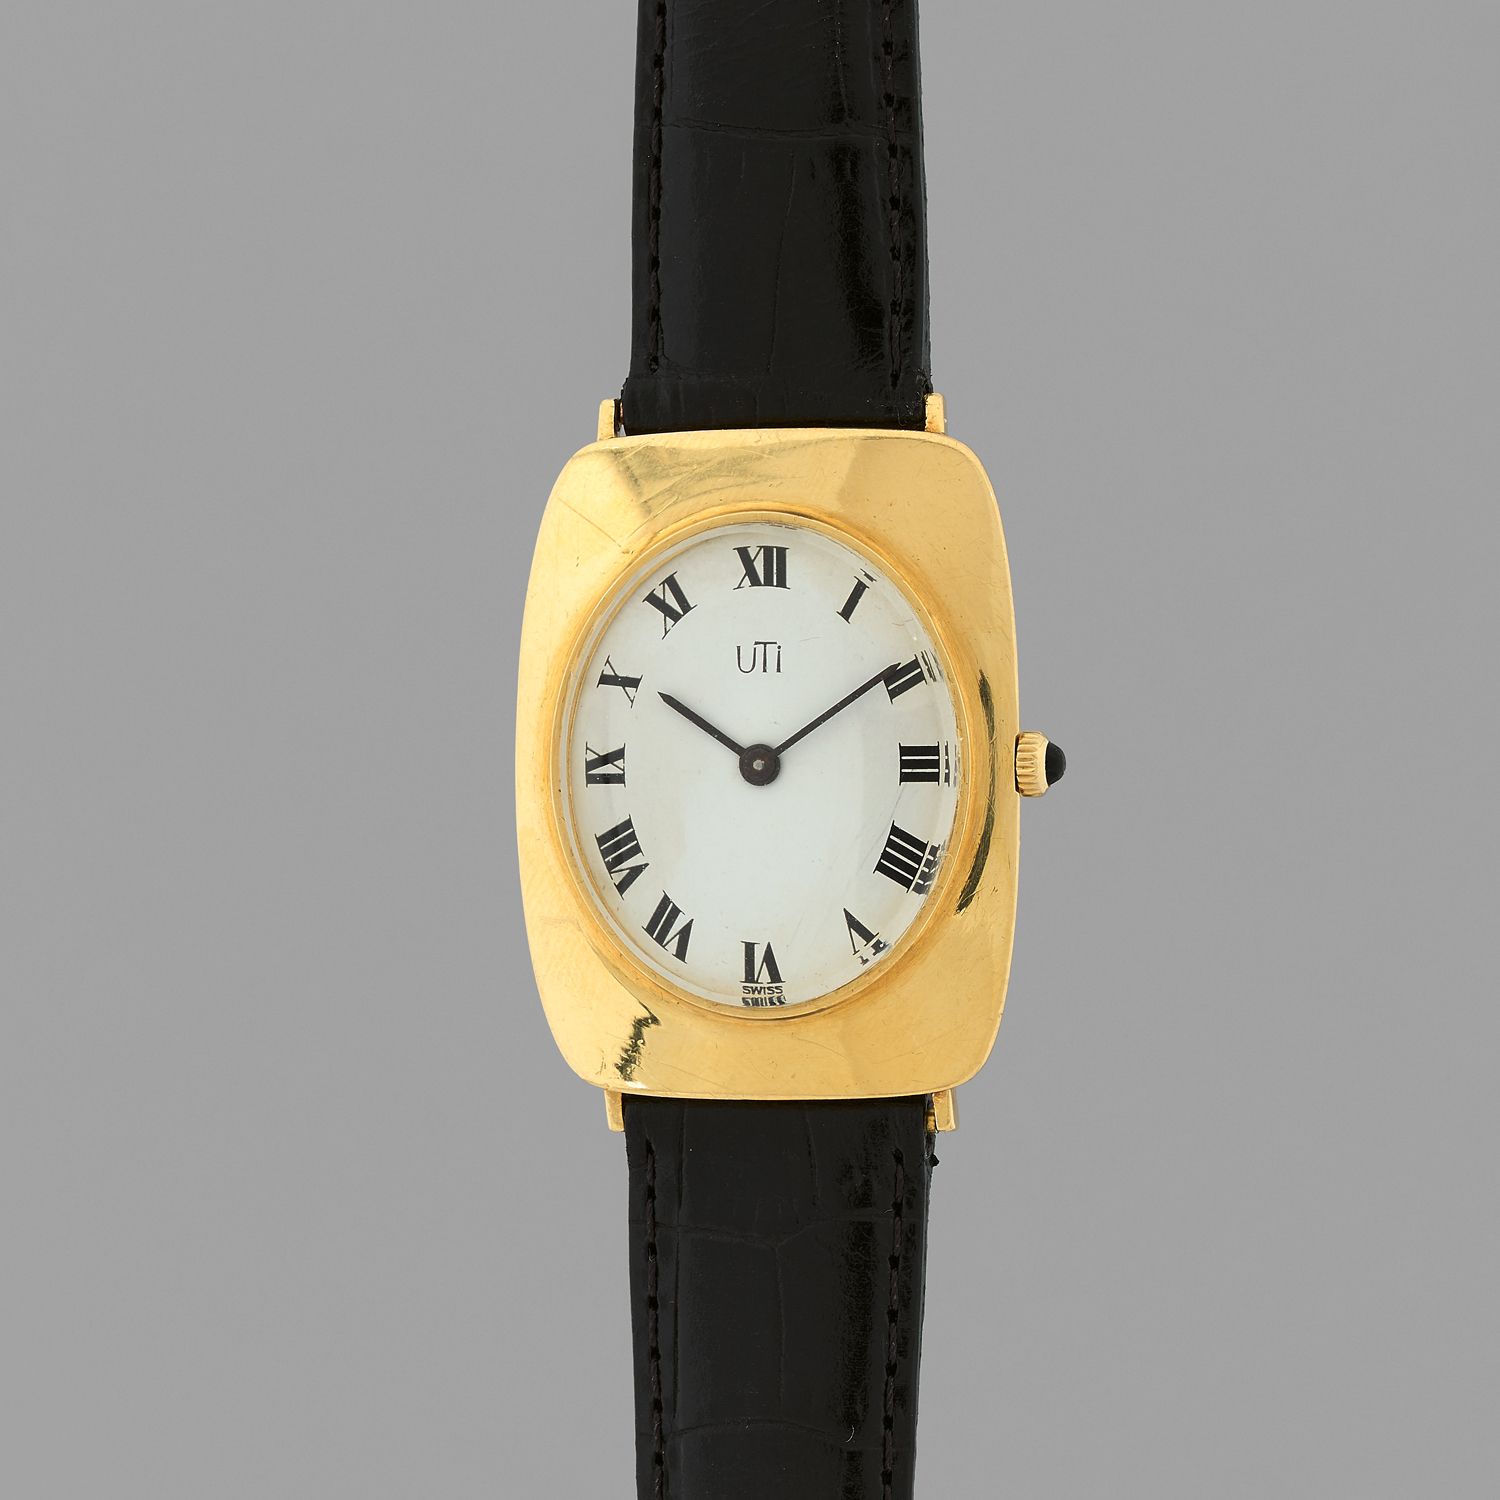 Null UTI
Discovolante.
Um: 1970.
Armbanduhr aus 750/1000er Gelbgold, weißes emai&hellip;